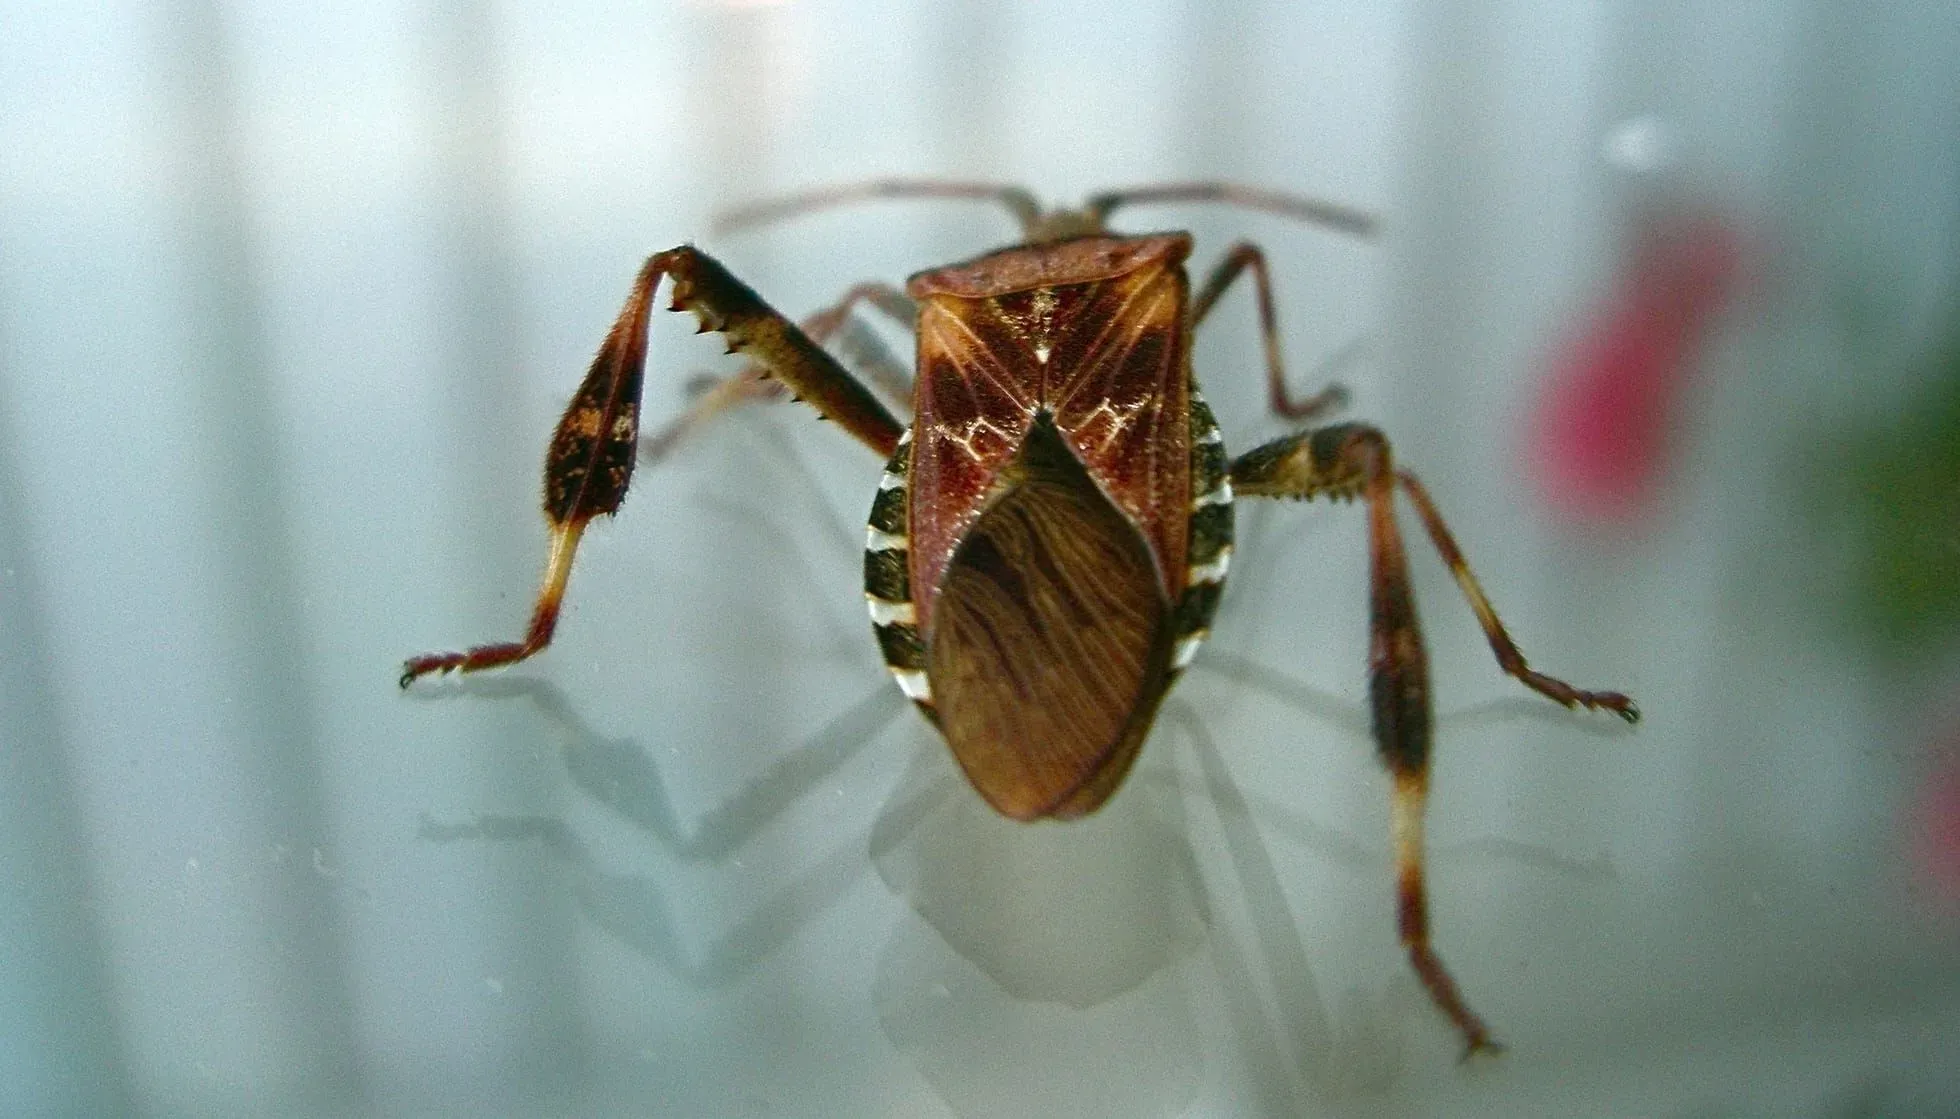  Western Conifer Seed Bug on glass